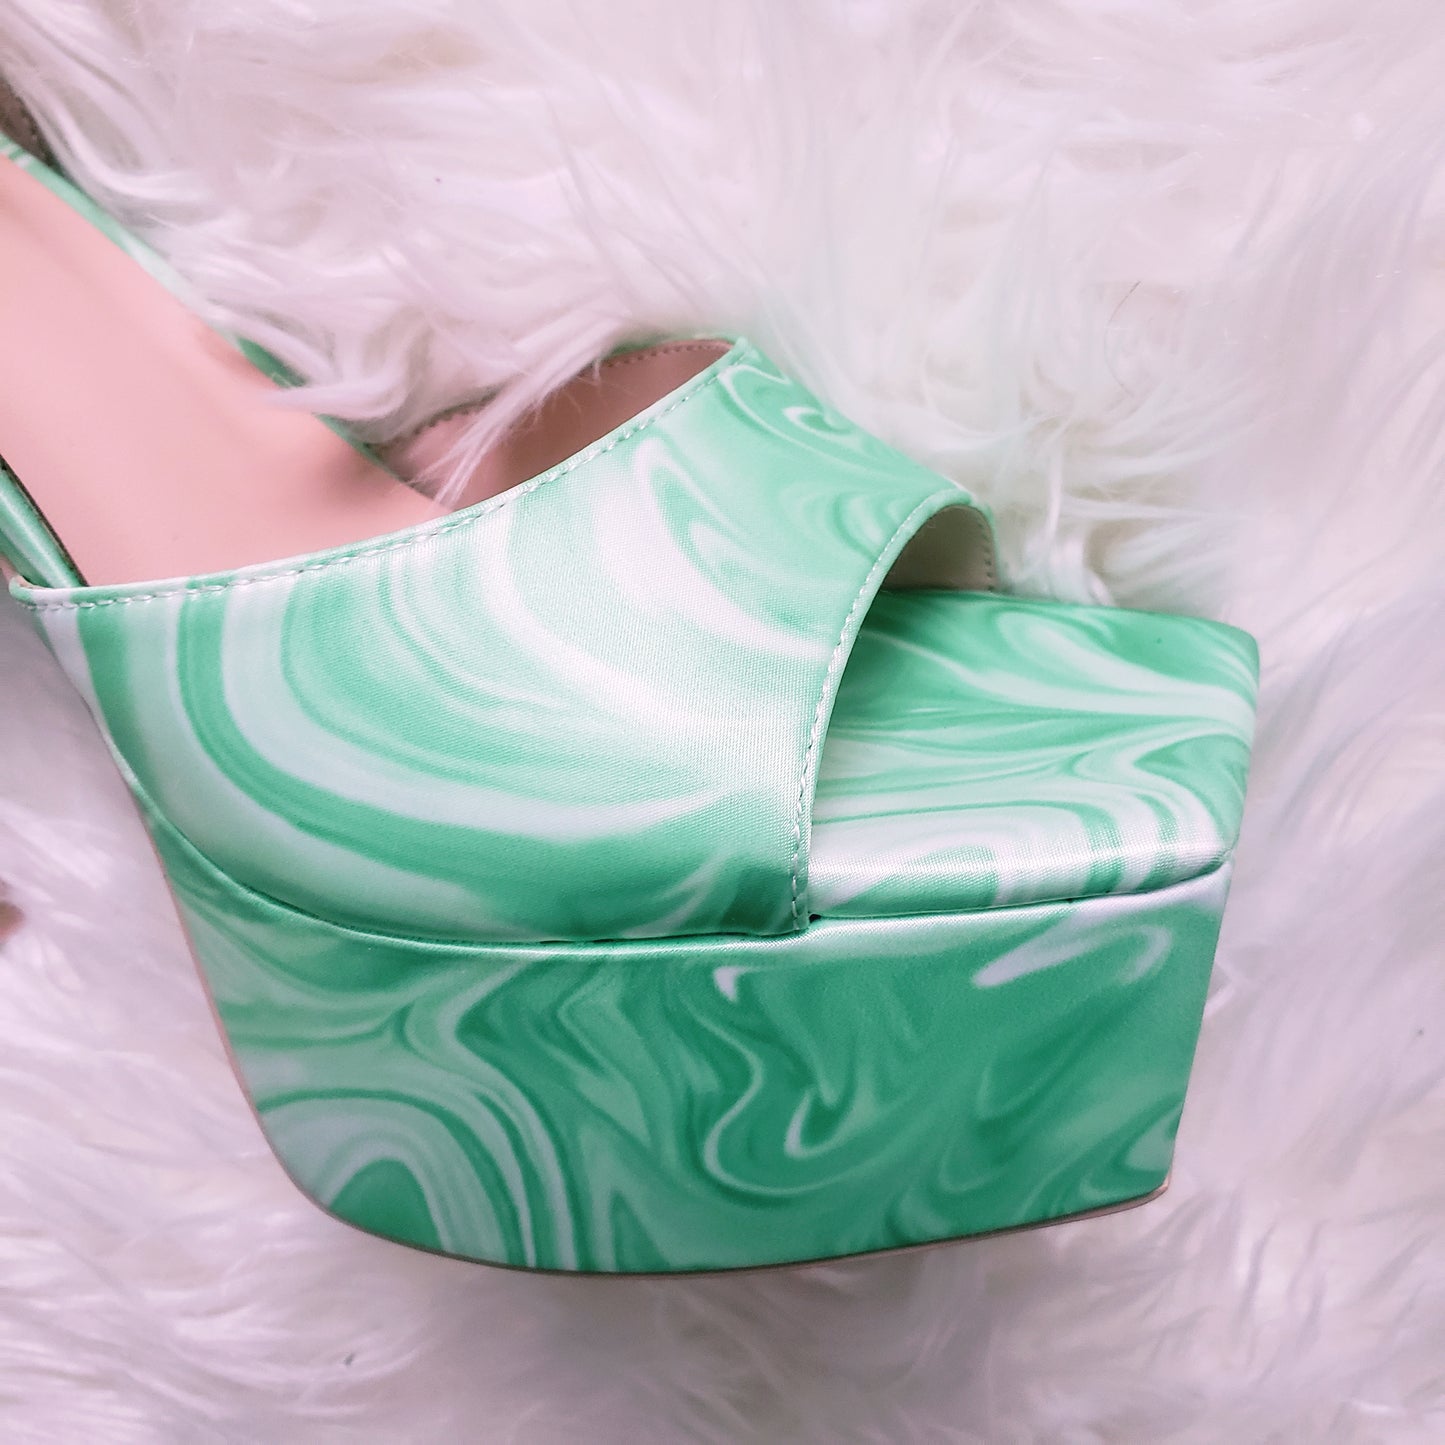 Satin Marble swirl platform heels with strappy design and open toe. Flared platform heel.